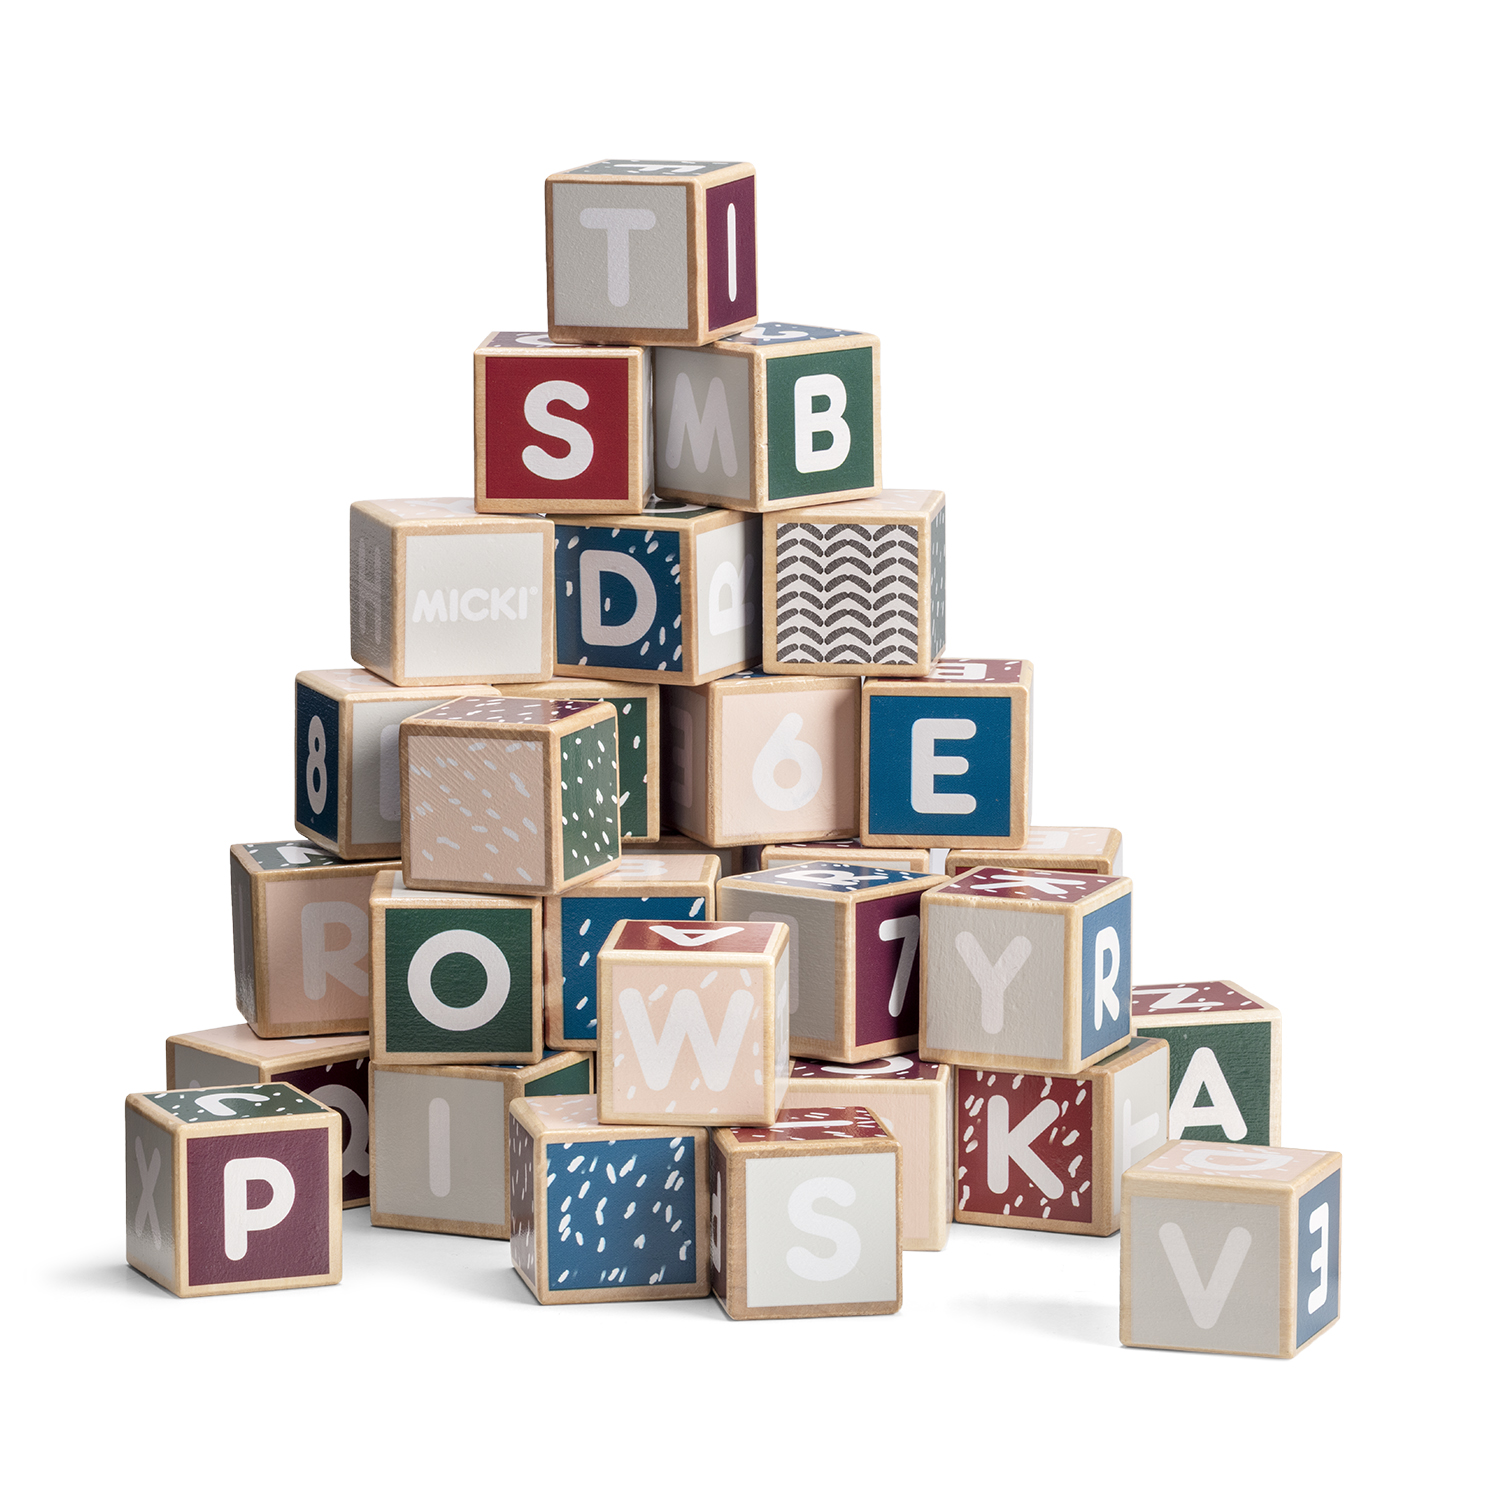 Micki micki decorative letter blocks 36 pieces